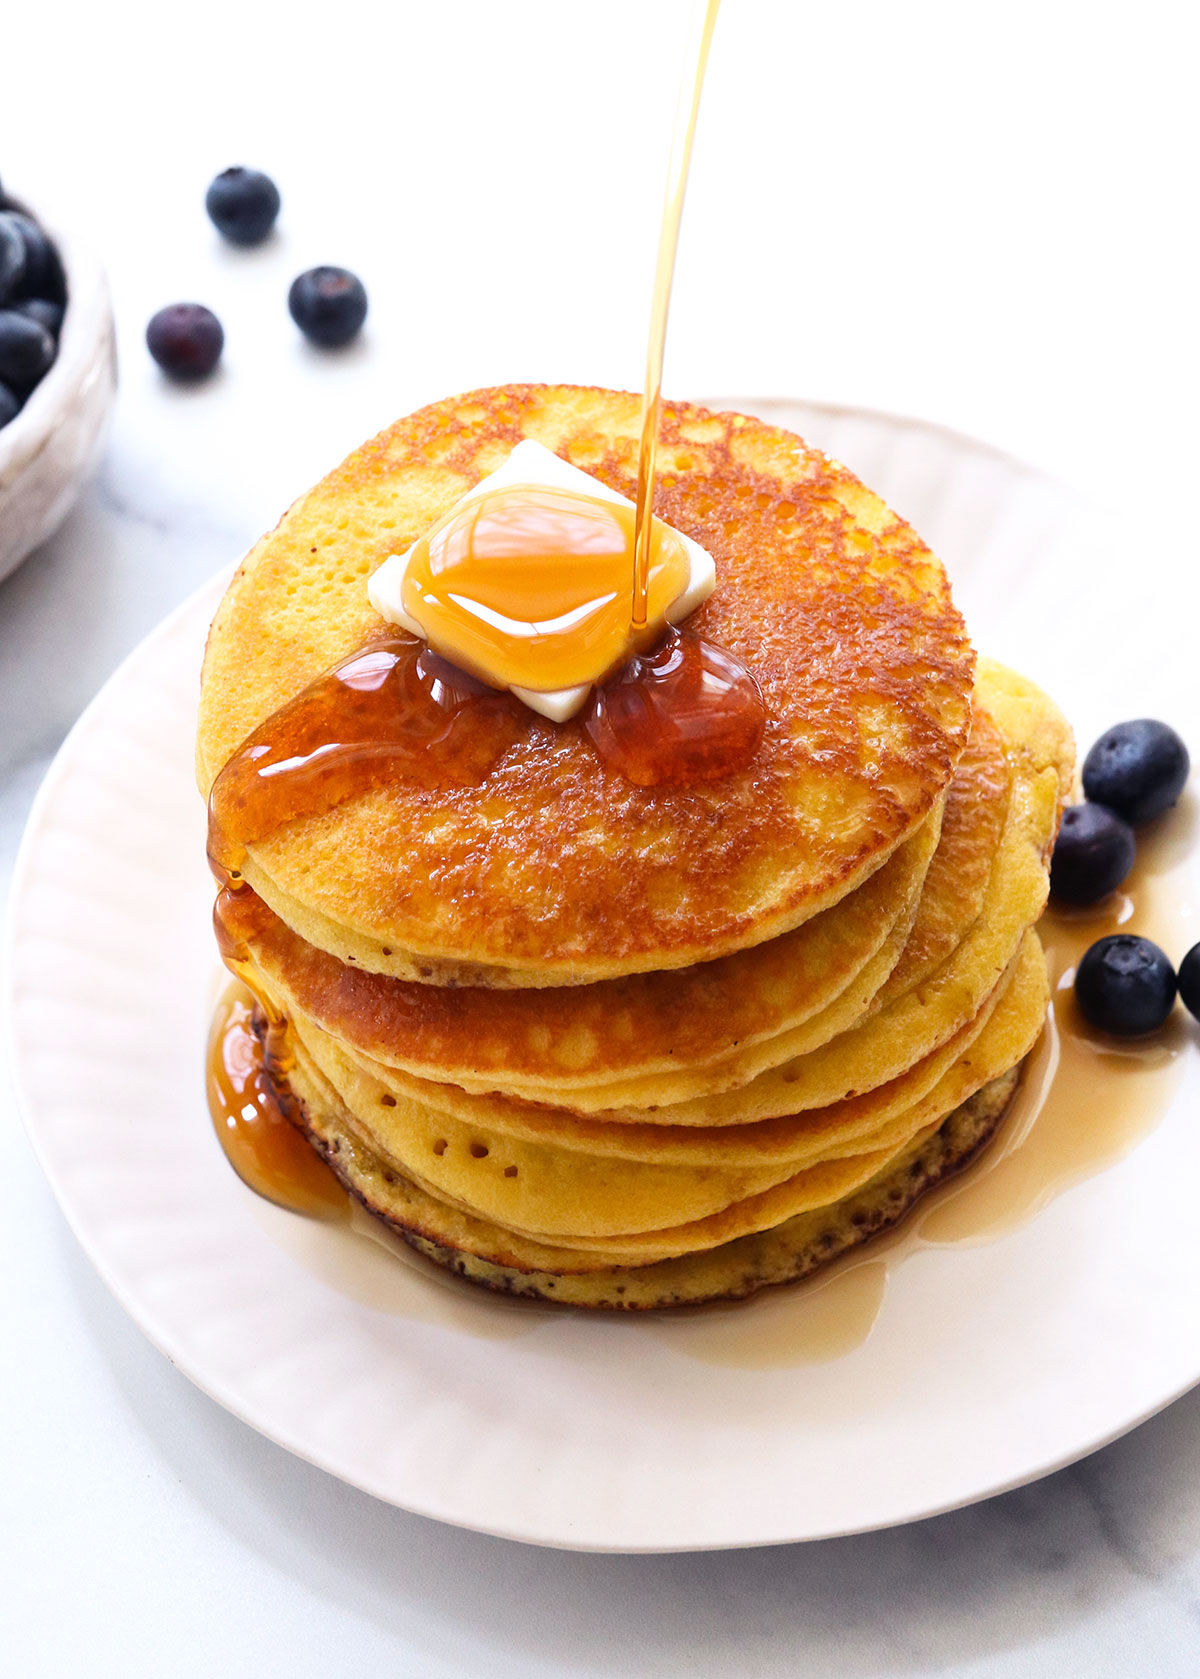 https://detoxinista.com/wp-content/uploads/2020/07/almond-flour-pancakes-recipe-photo.jpg